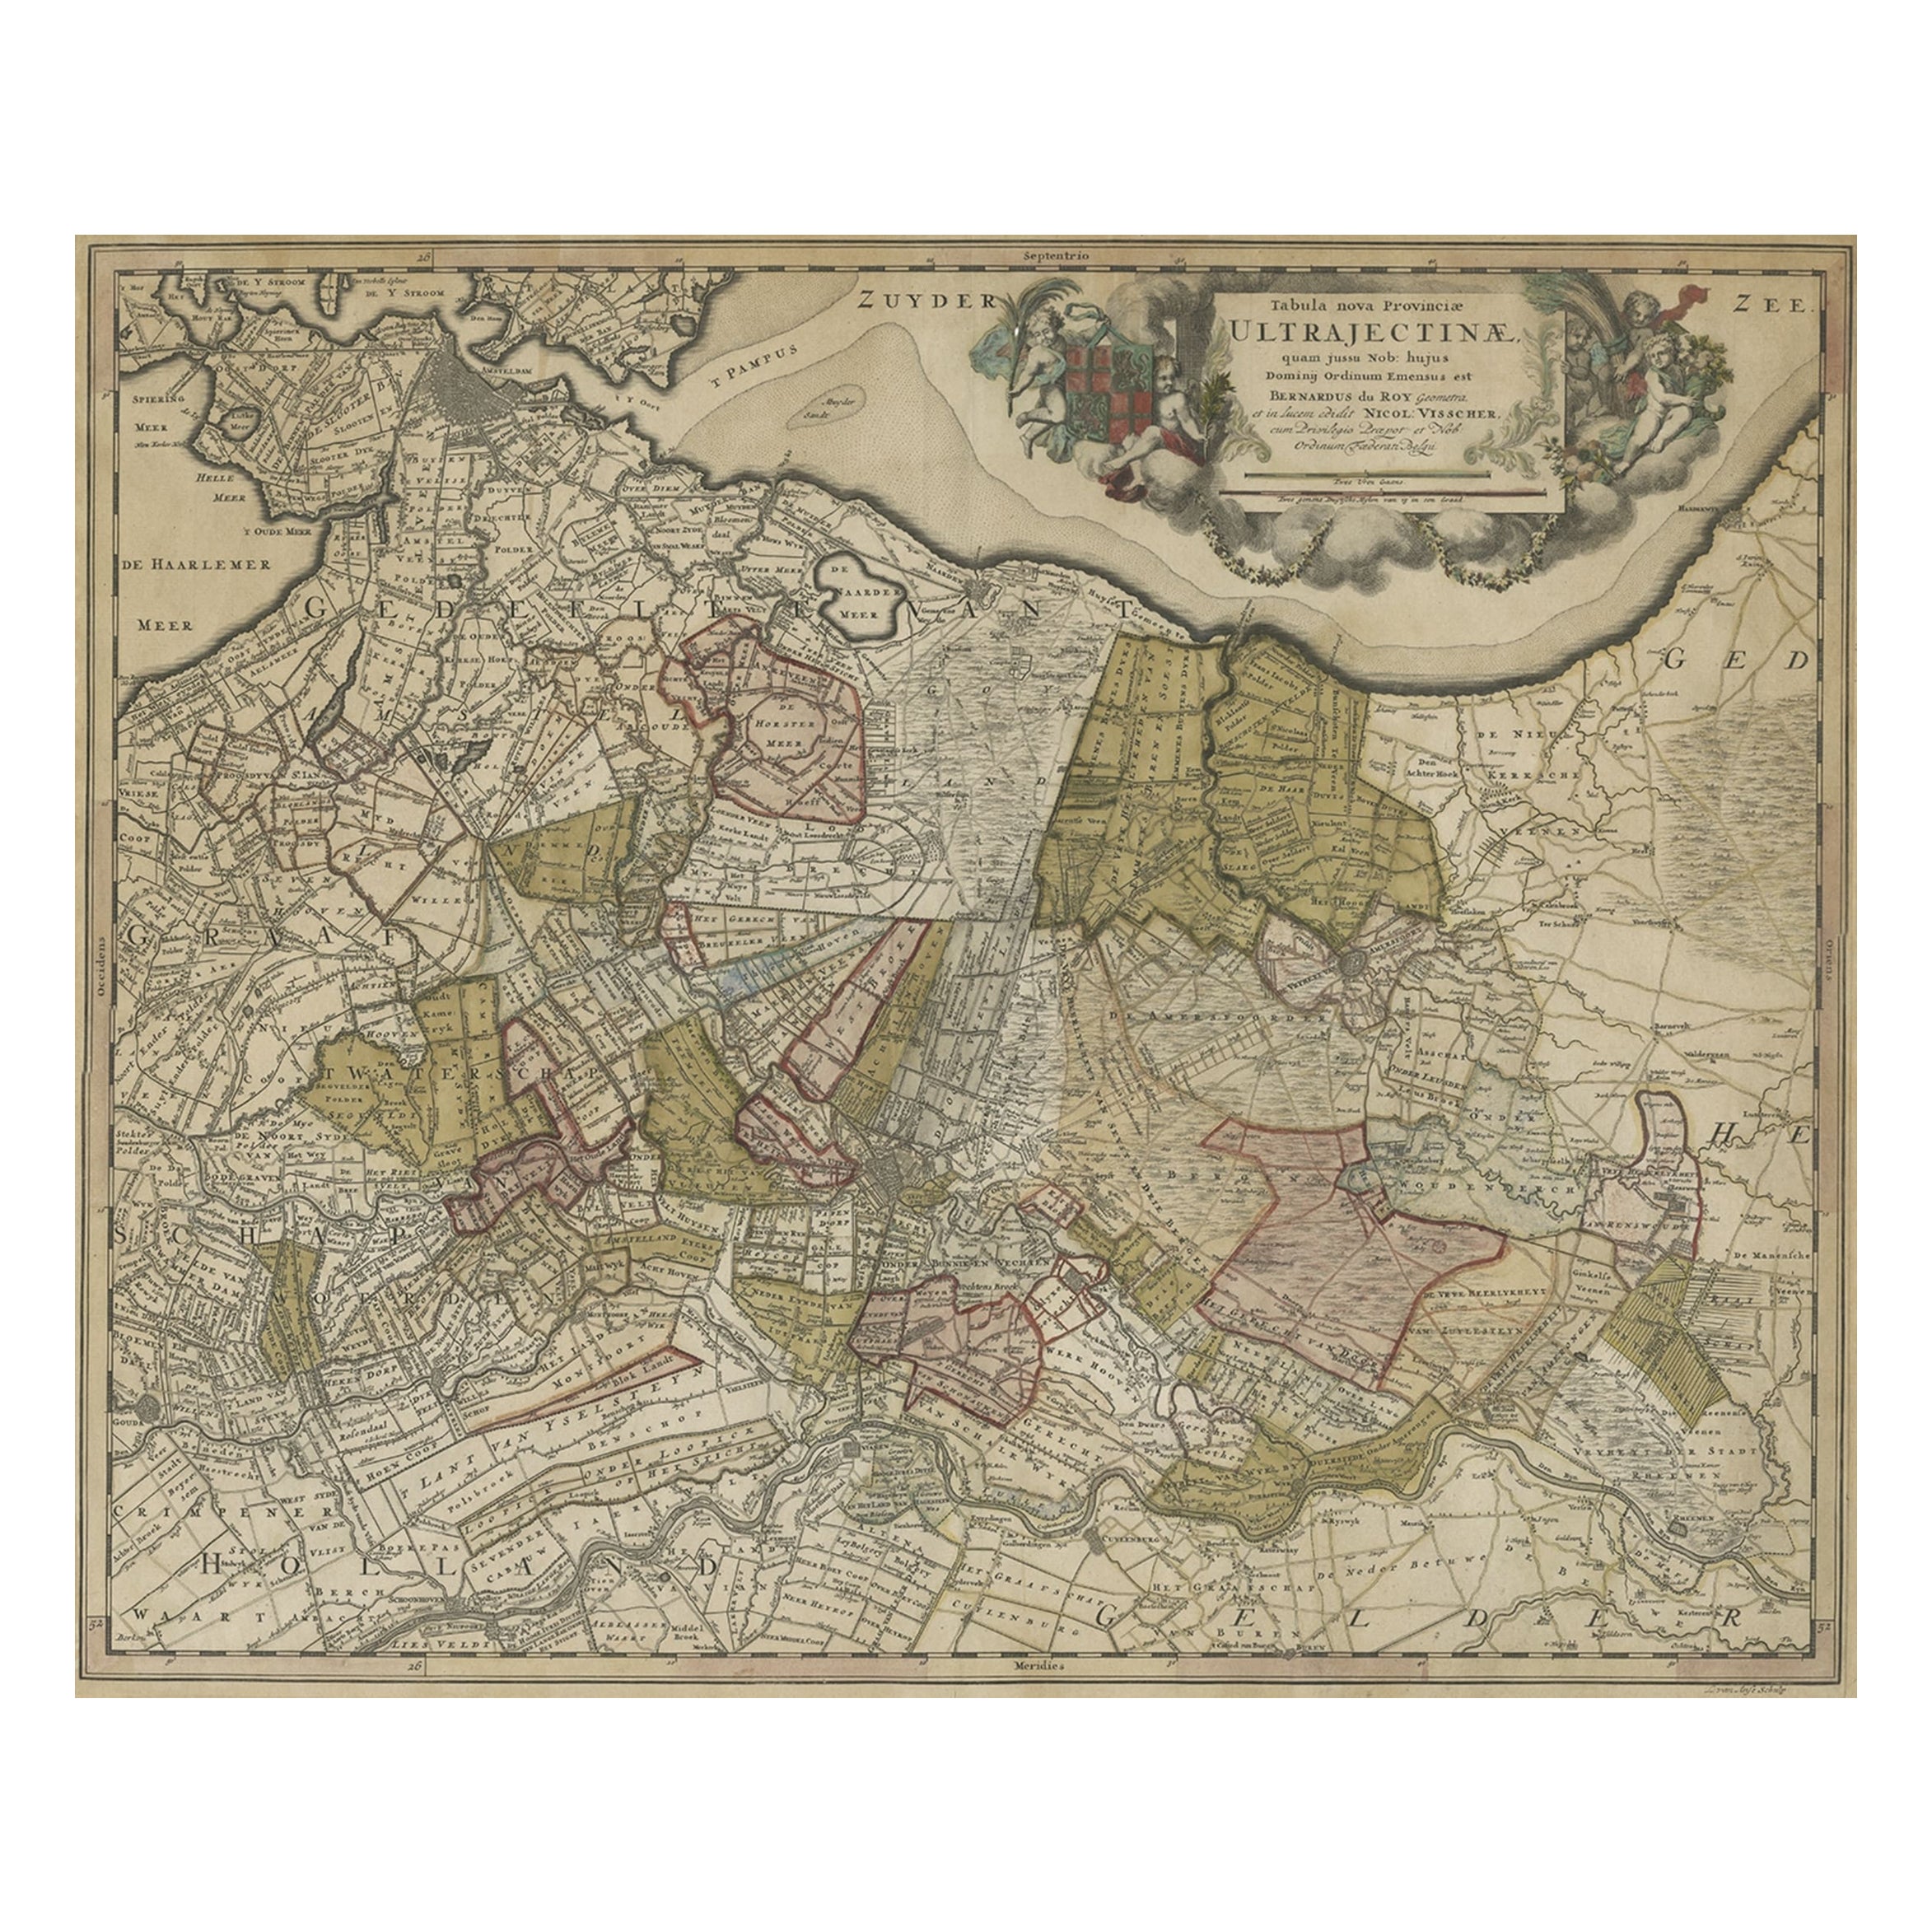 Original Colored Antique Map of Utrecht & Surroundings, The Netherlands, c1690